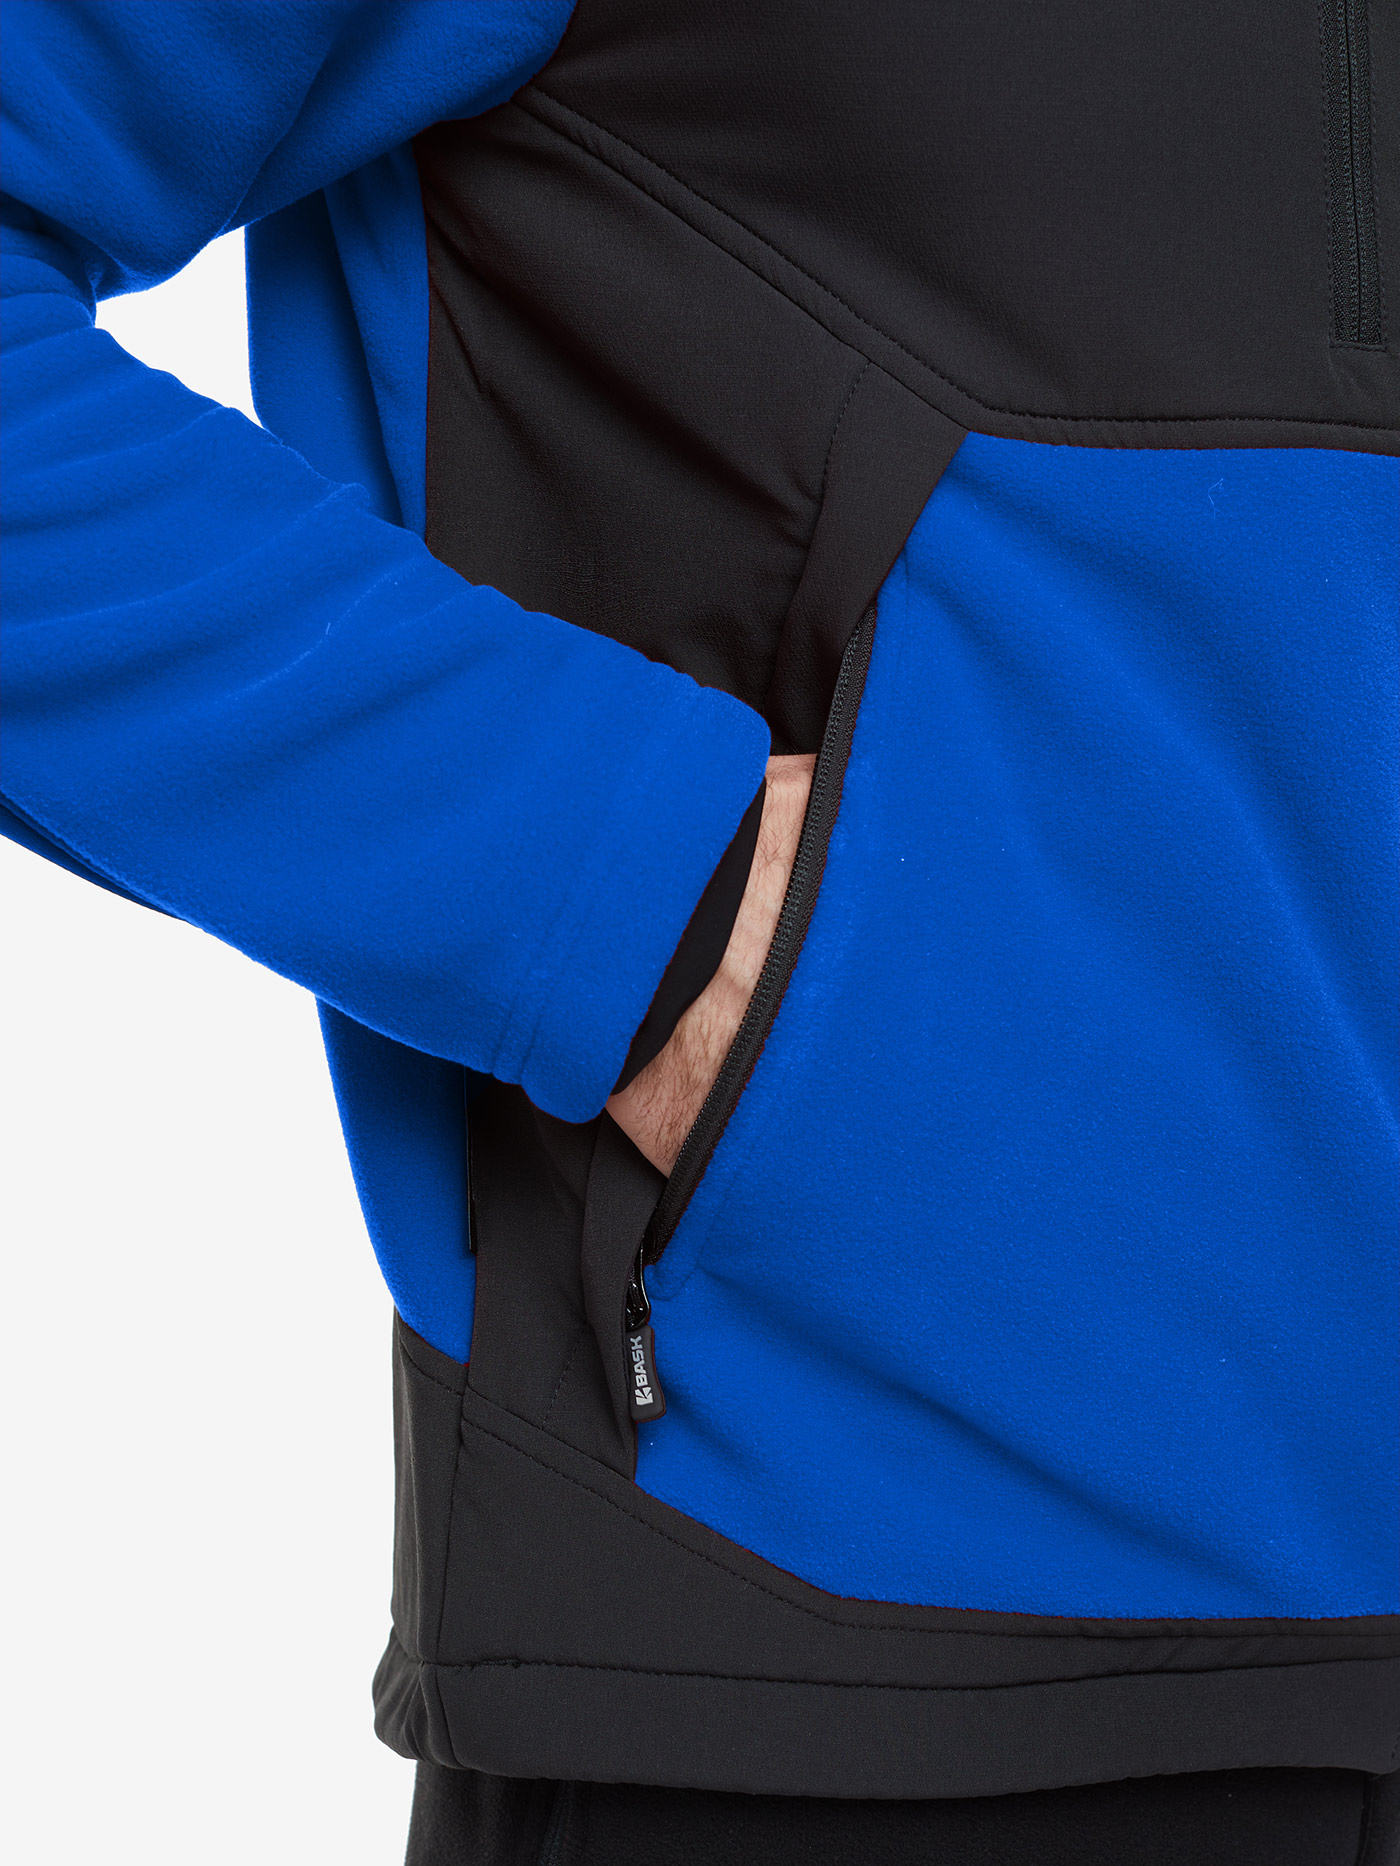 Куртка BASK, размер 48, цвет синий 2262-9305-048 Guide - фото 8